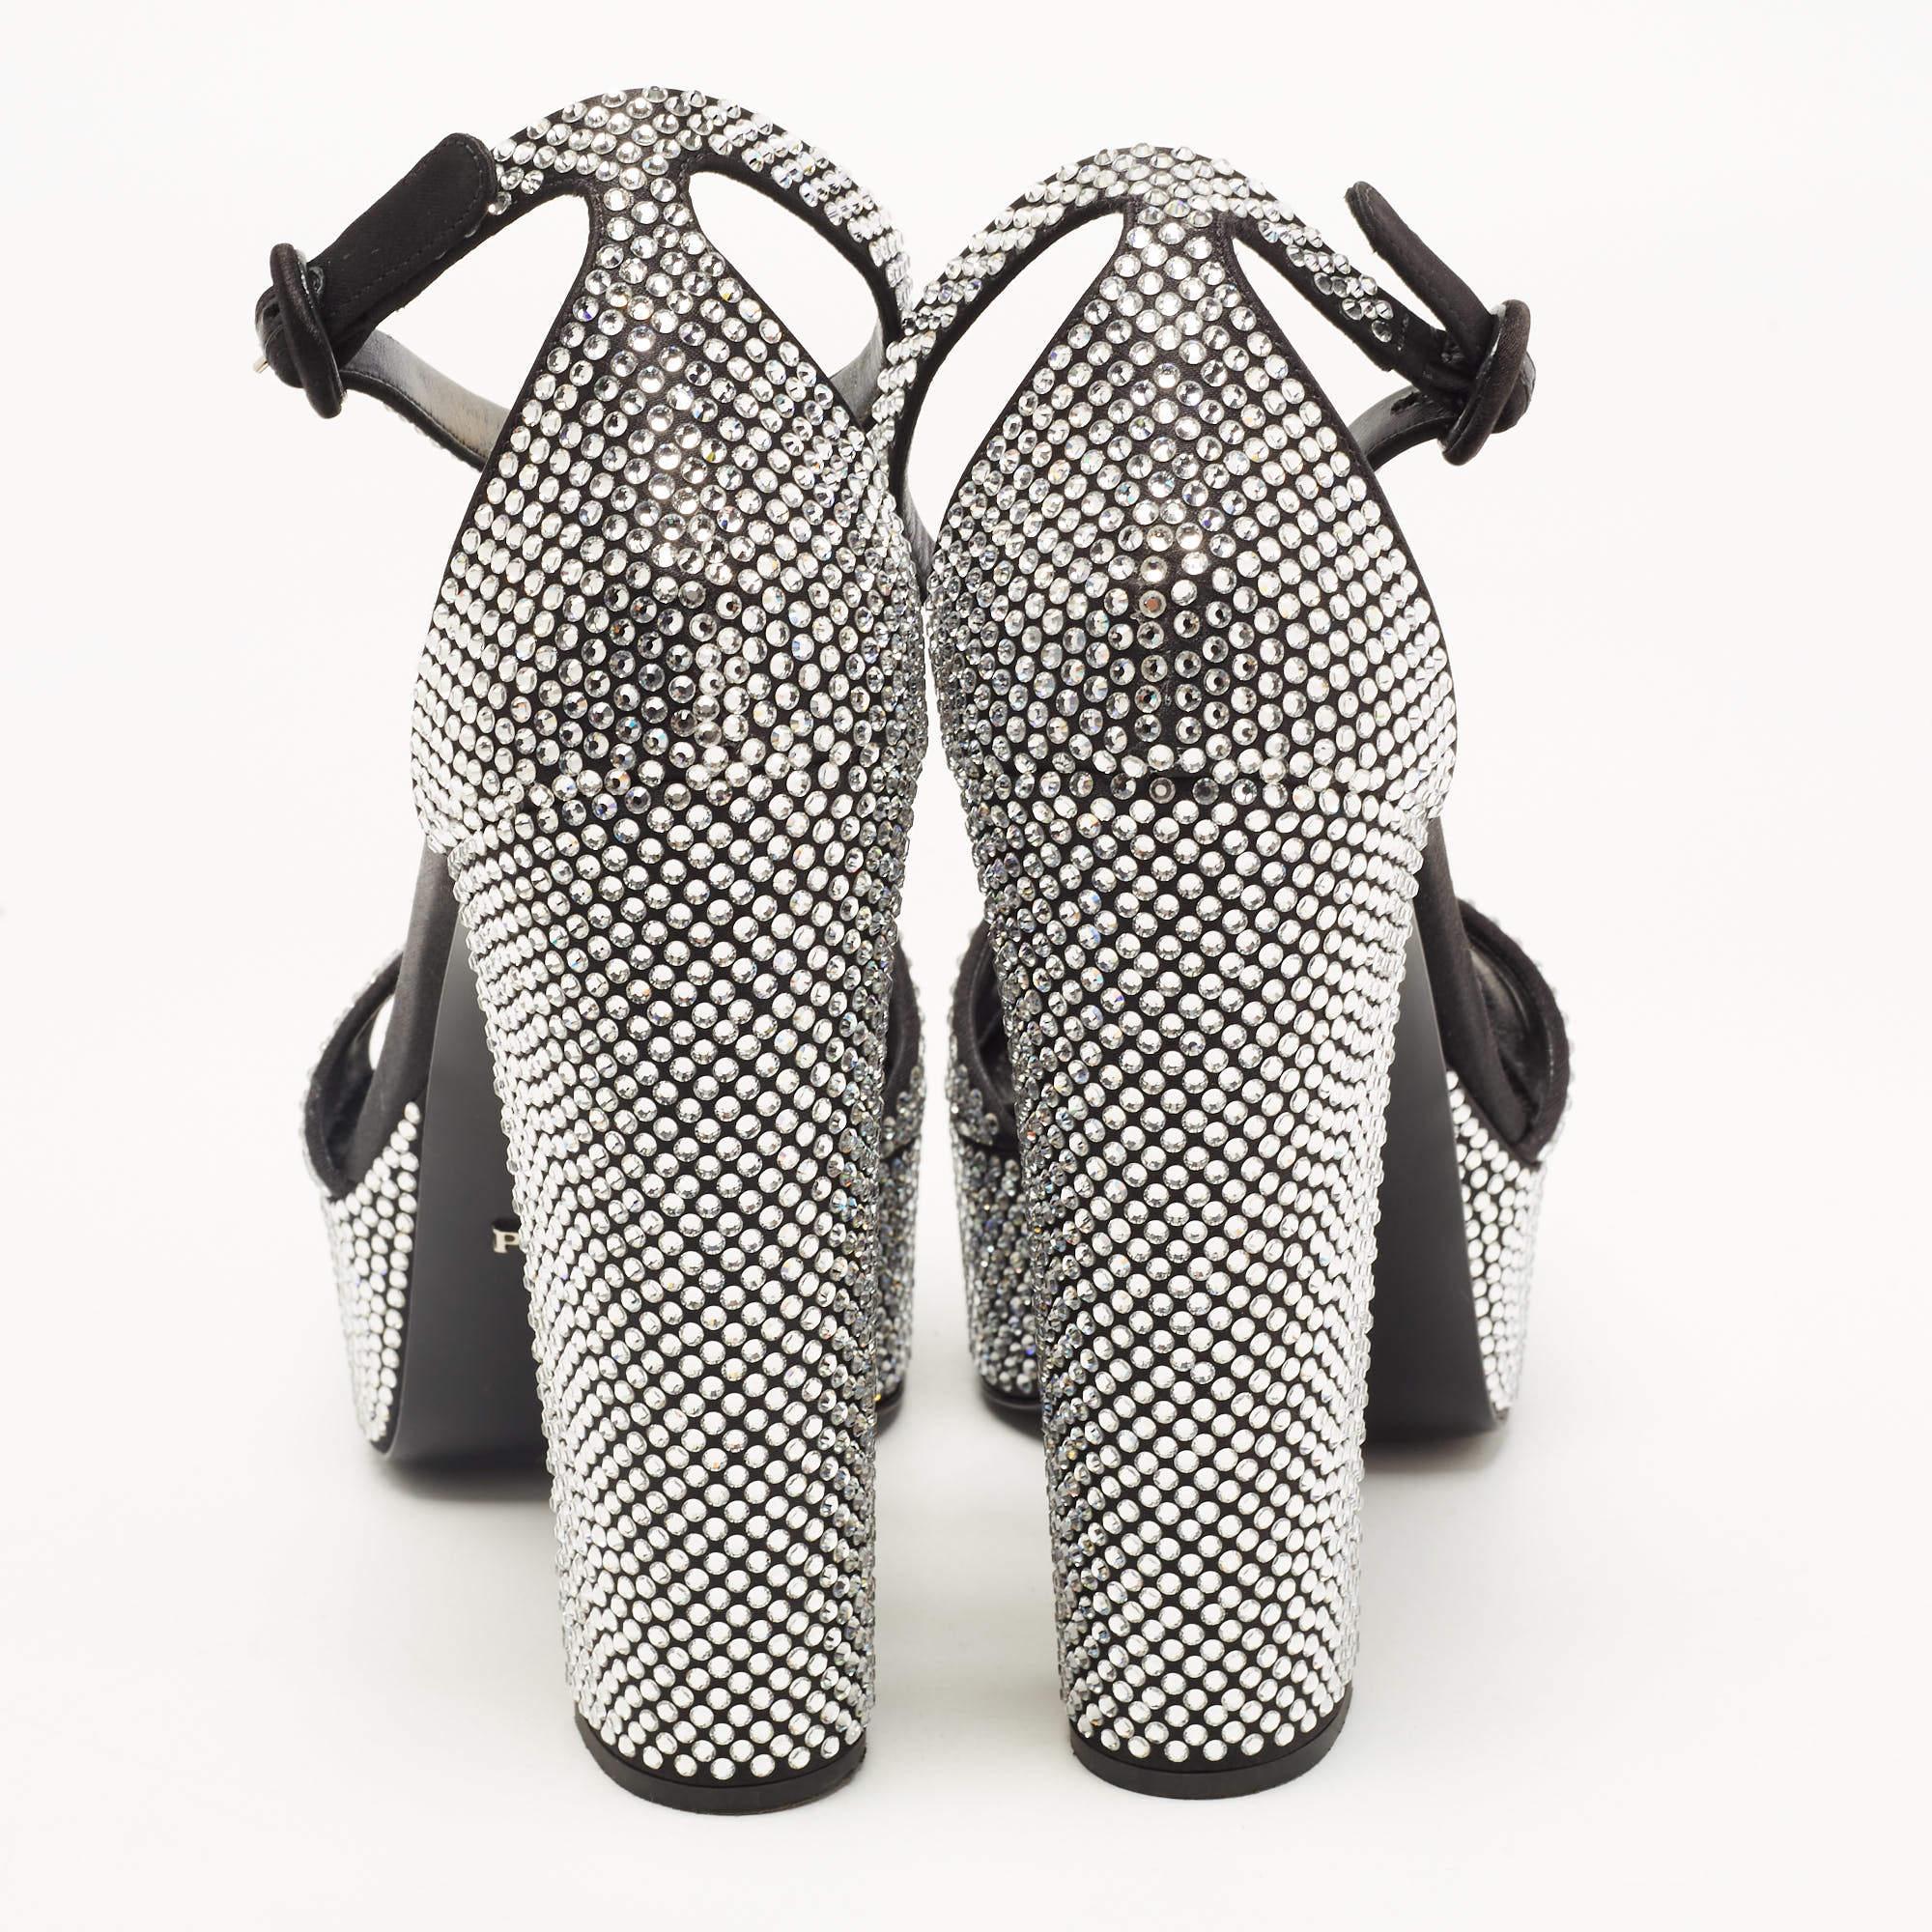 Prada Black/Silver Satin and Crystals Platform Sandals Size 39.5 3